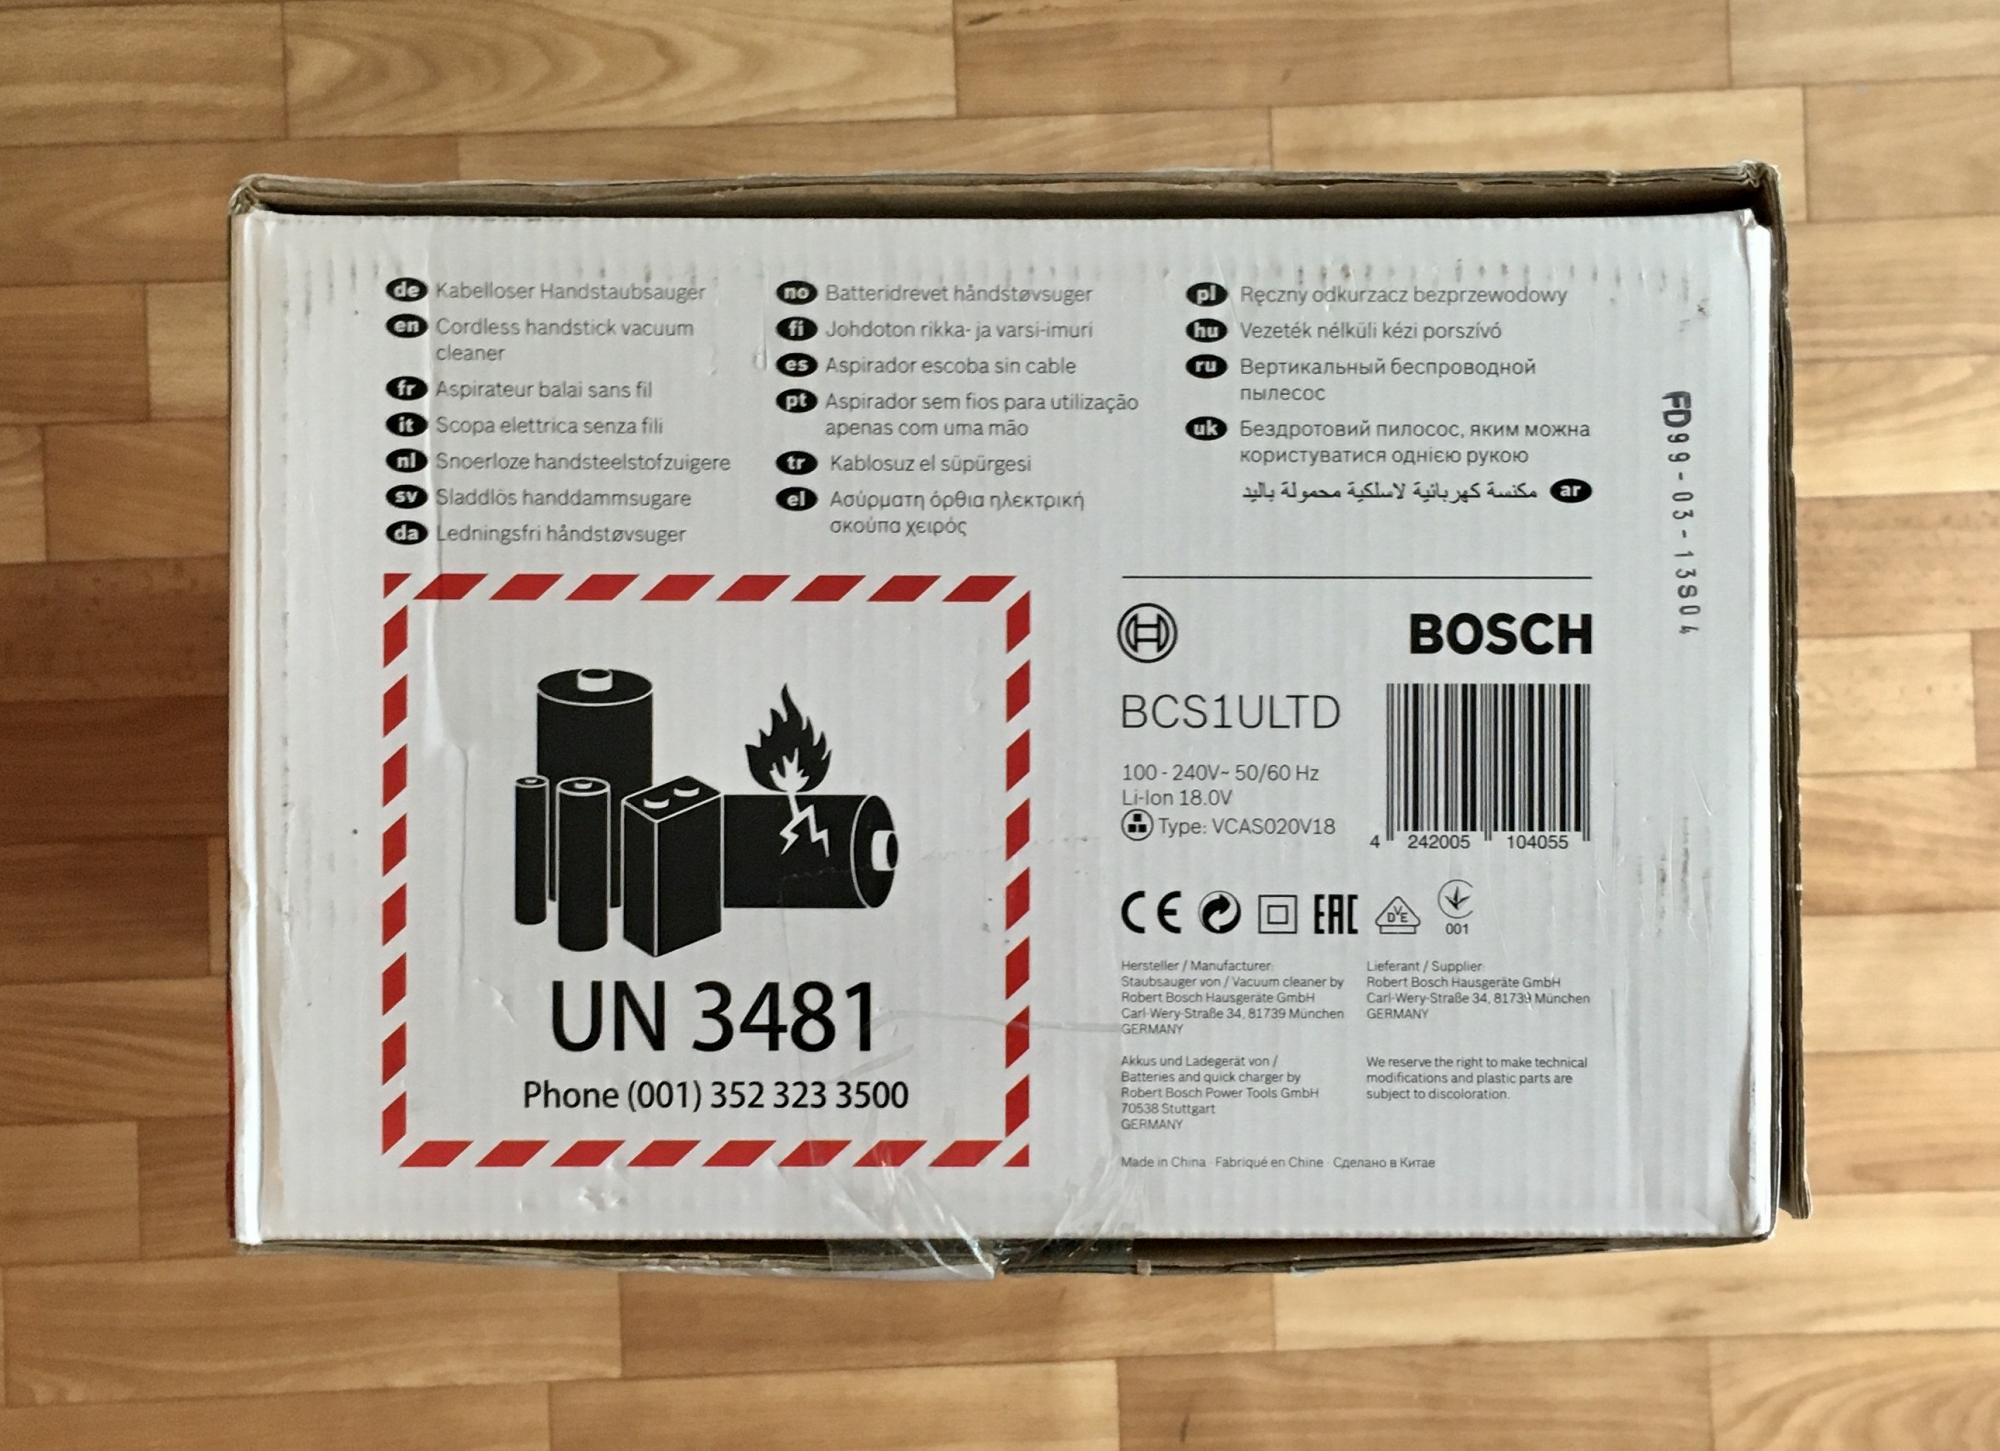 Unlimited serie 8. Bosch BCS 1ultd Grey. Пылесос Bosch serie 8 инструкция. Пылесос Bosch Unlimited serie 6 2.5 am. Bosch Unlimited serie 6 шильдик.